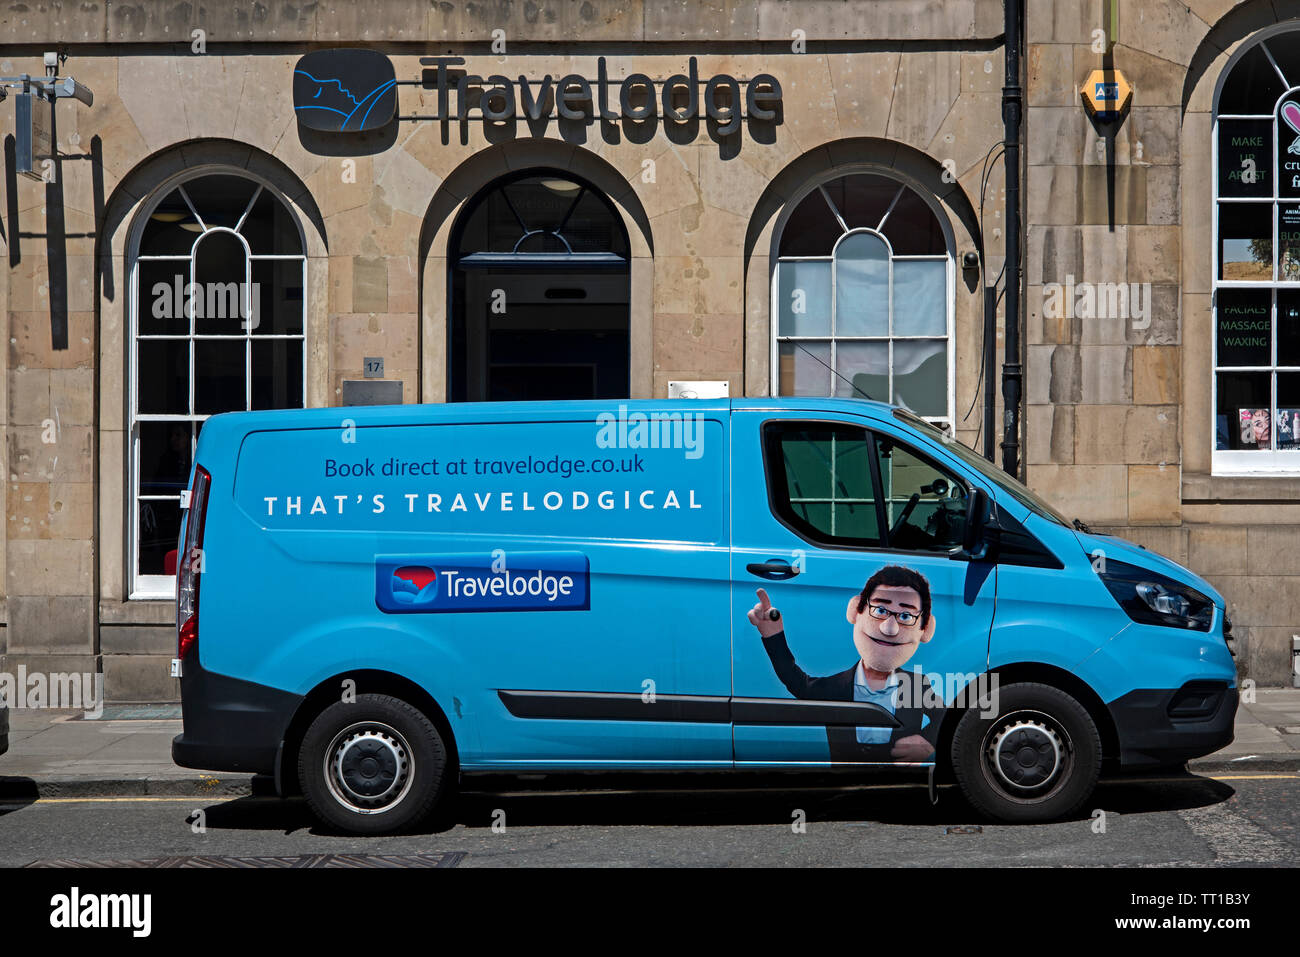 Travelodge van parked outside a Travelodge in Edinburgh, Scotland, UK Stock  Photo - Alamy